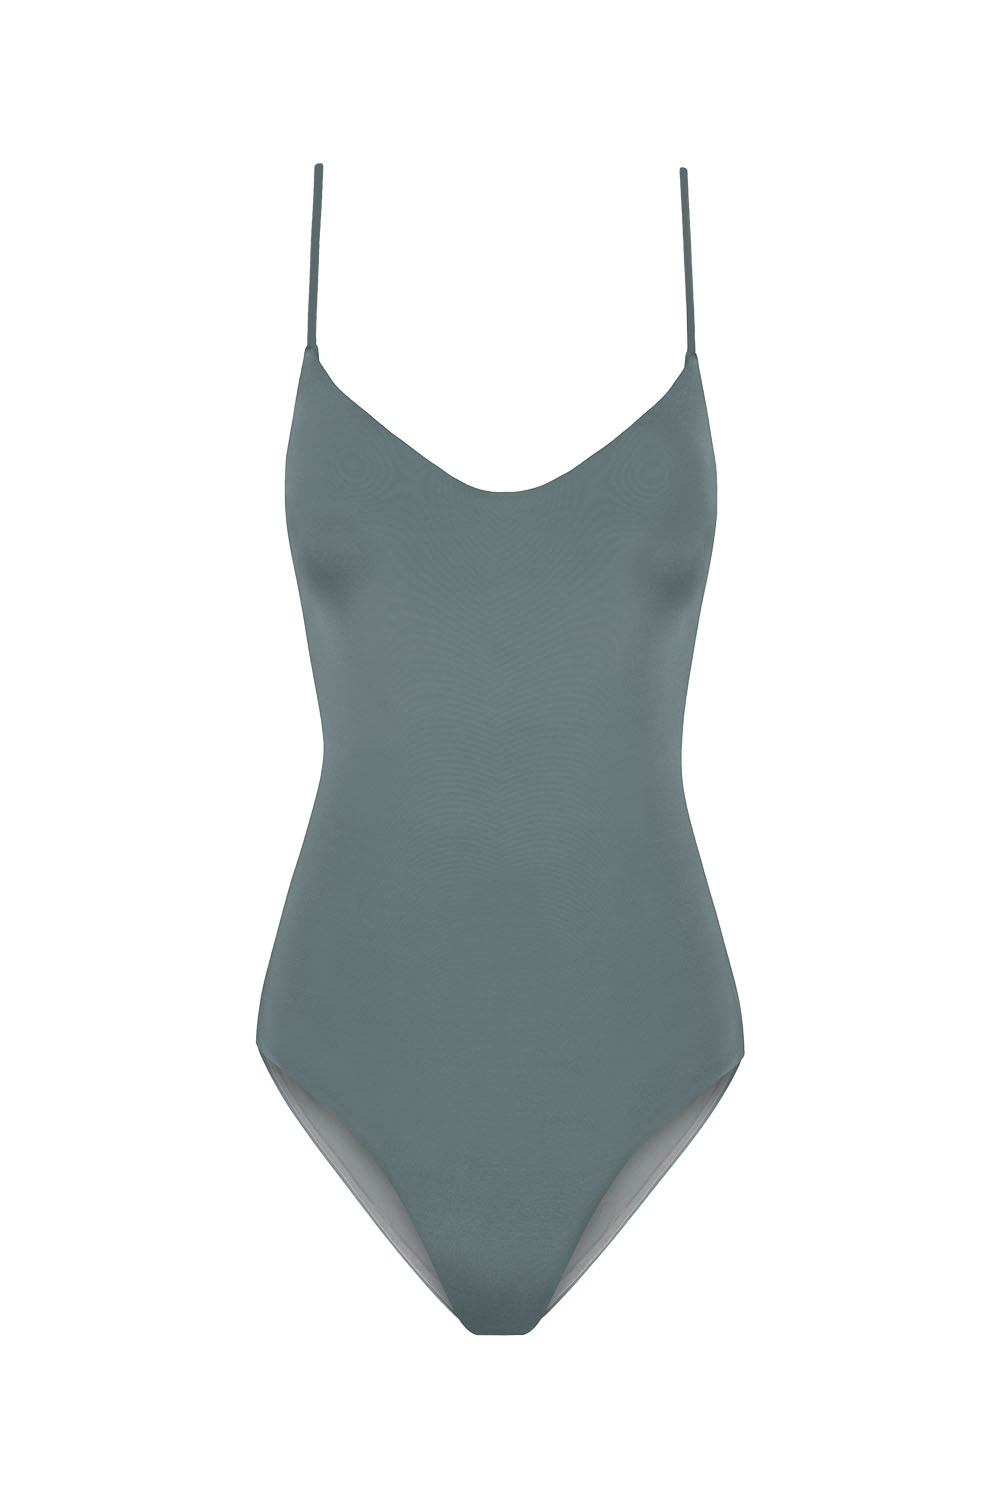 Sustainable Luxury Swimwear / Ropa de baño sostenible, onepiece swimsuit/ bañador ecológico. Aridane onepiece kelp, econyl, NOW_THEN